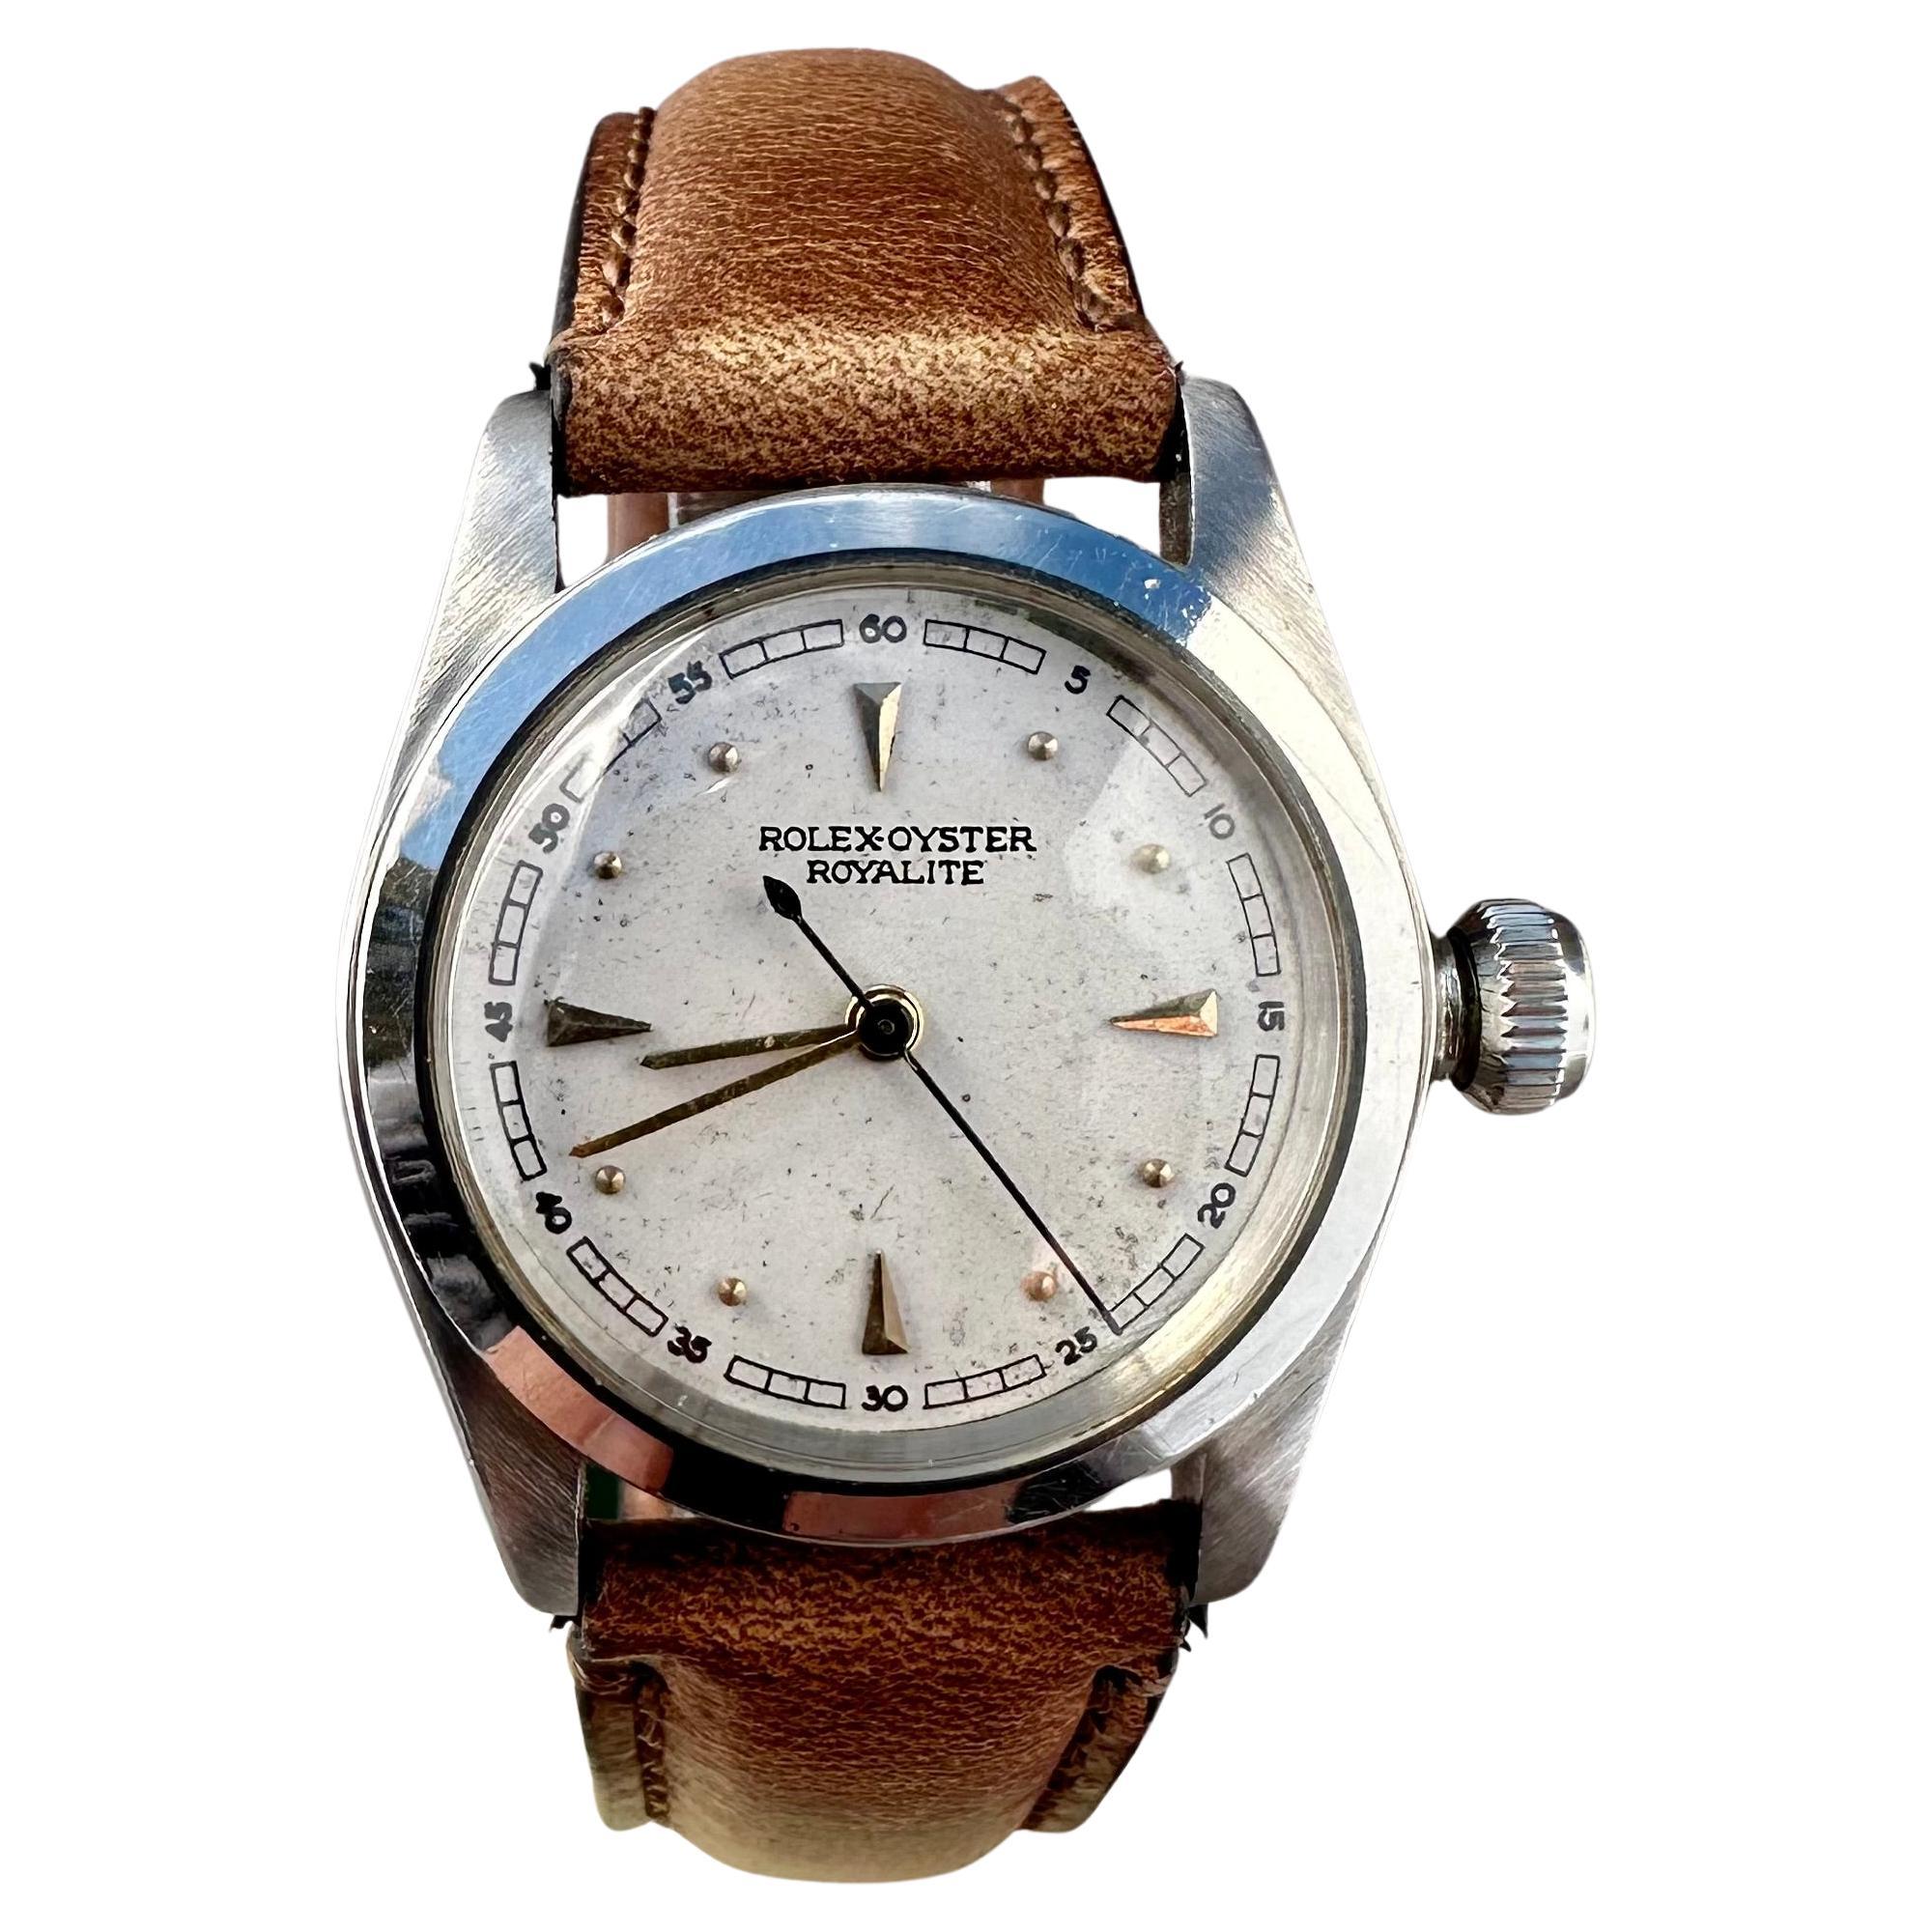 Vintage Rolex Royalite Watch 2280 Circa 1939 For Sale